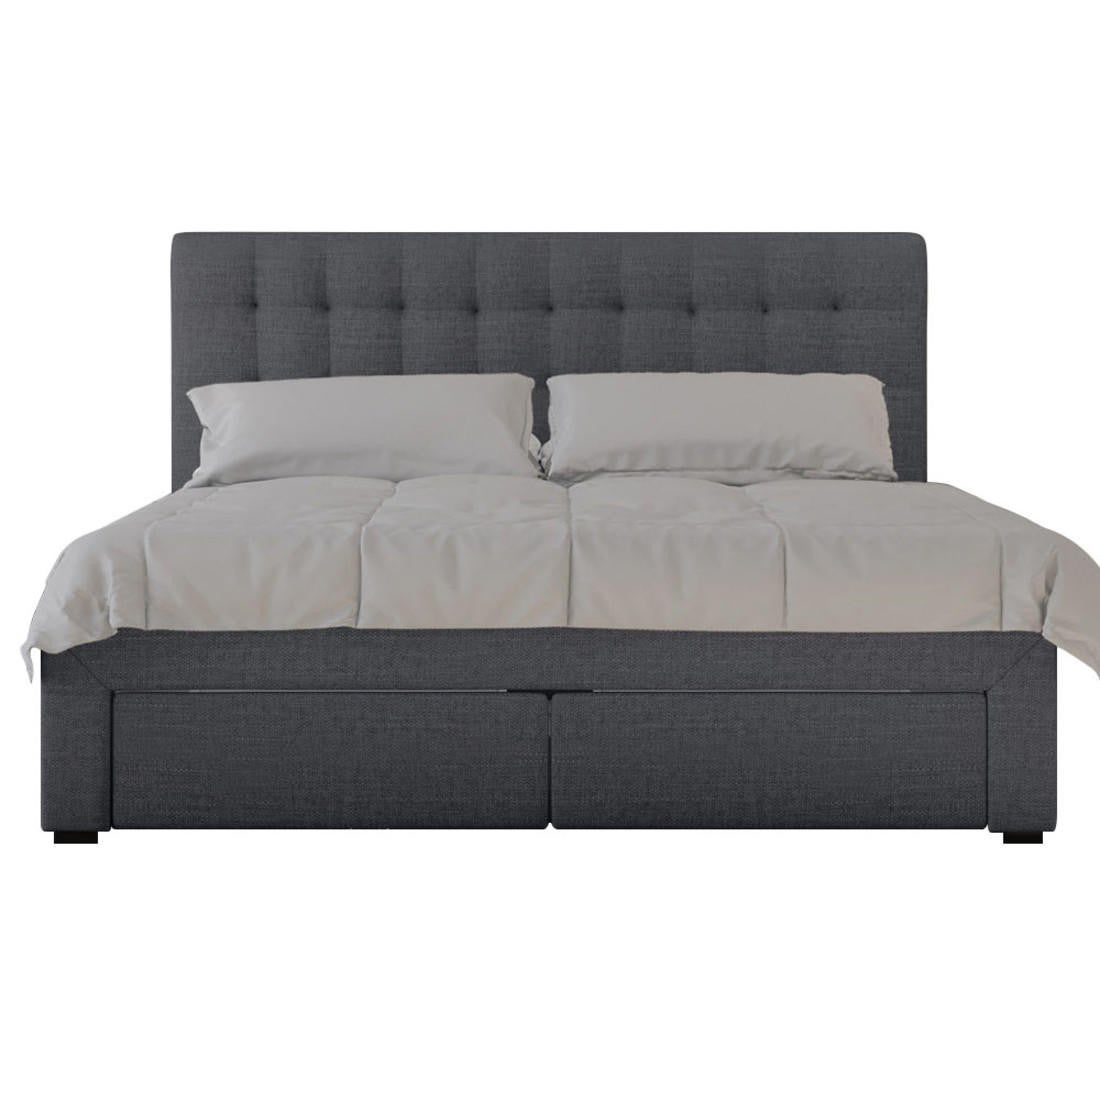 Martina Fabric Bed with Storage Drawers - Dark Grey Queen Dark Grey